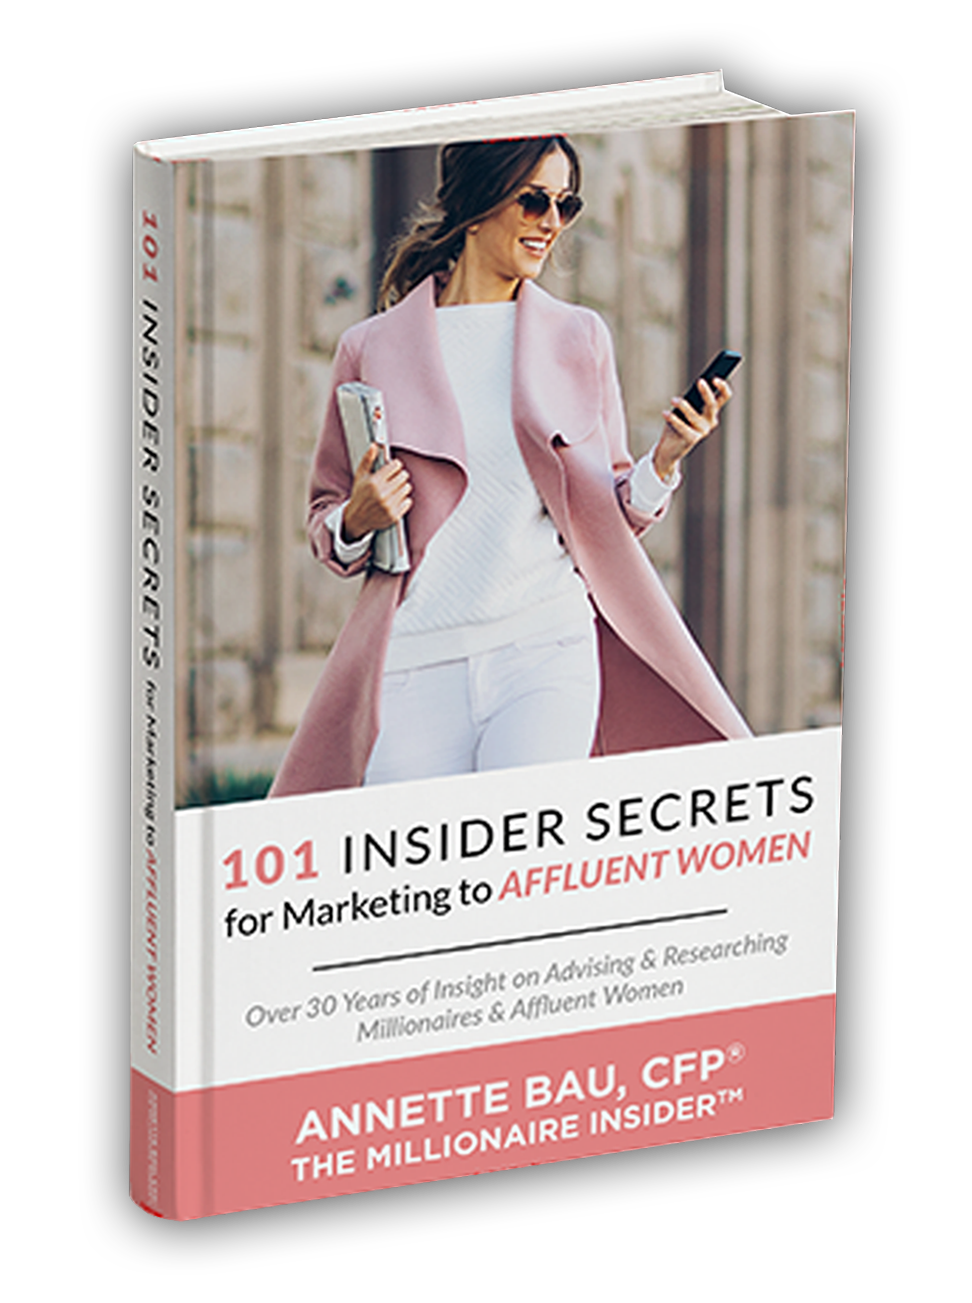 101 Insider secrets for marketing to affluent women